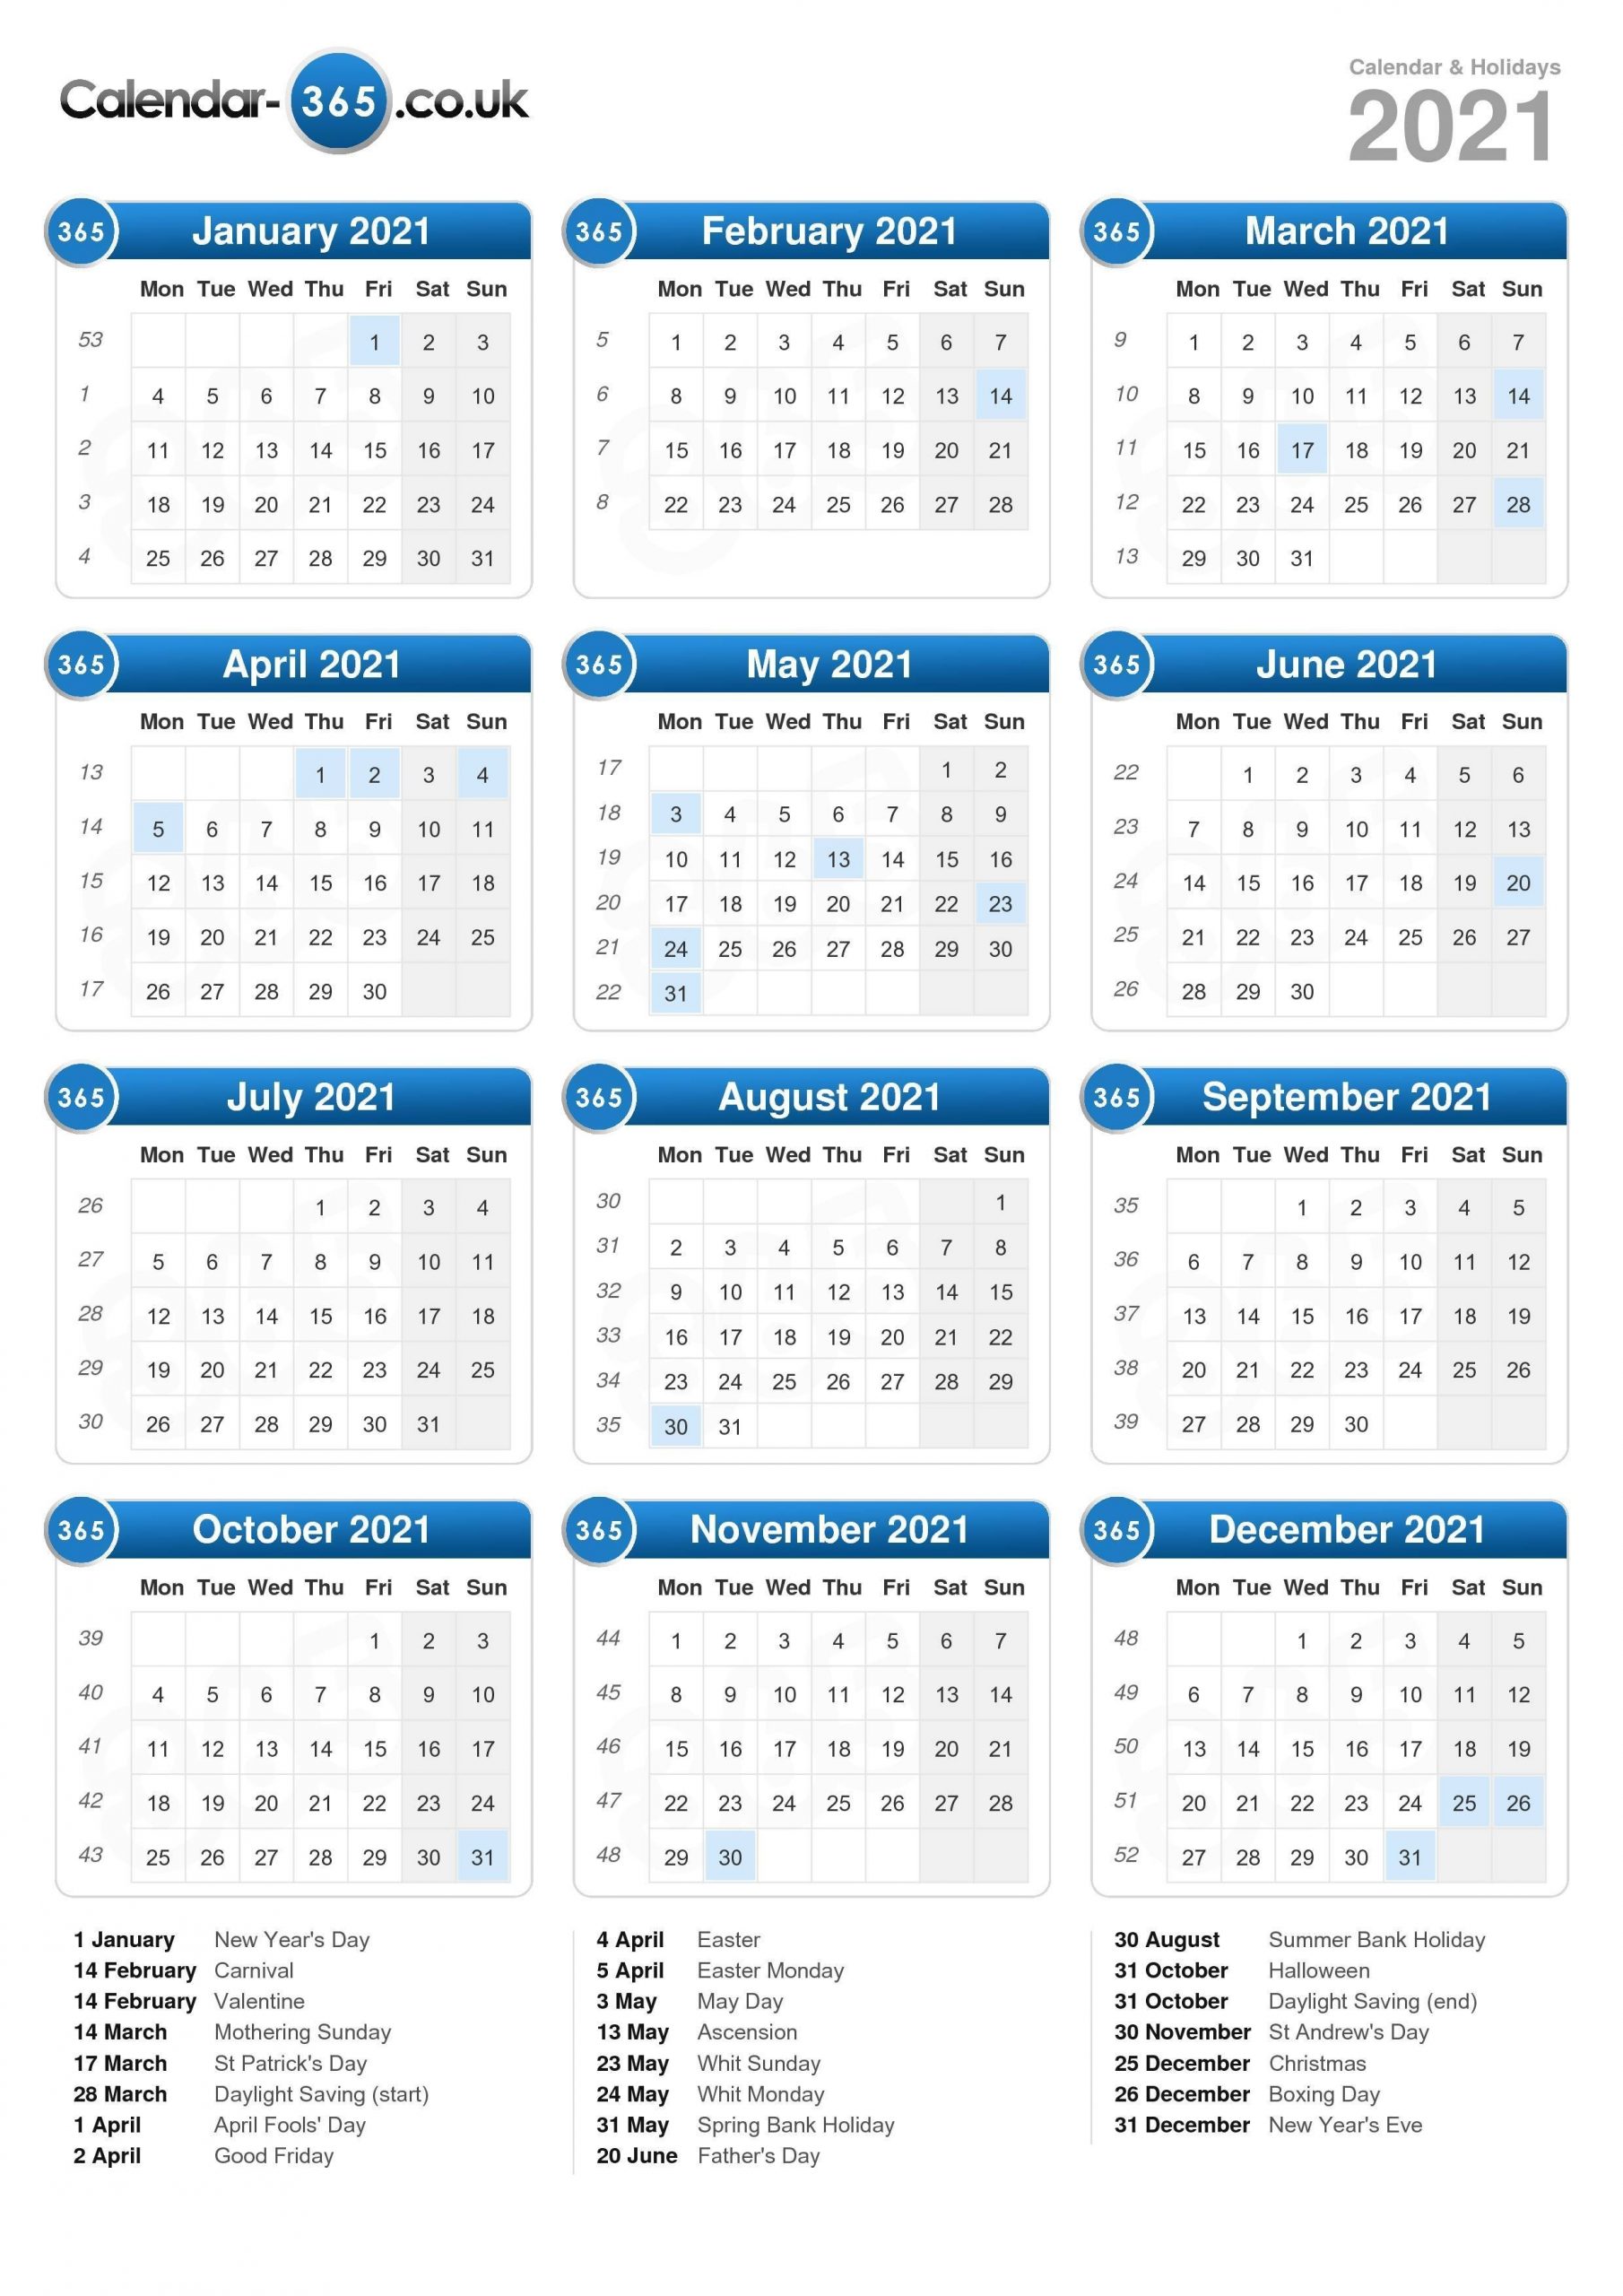 Calendar 2021-2021 Calendar Printable Free With Bank Holidays